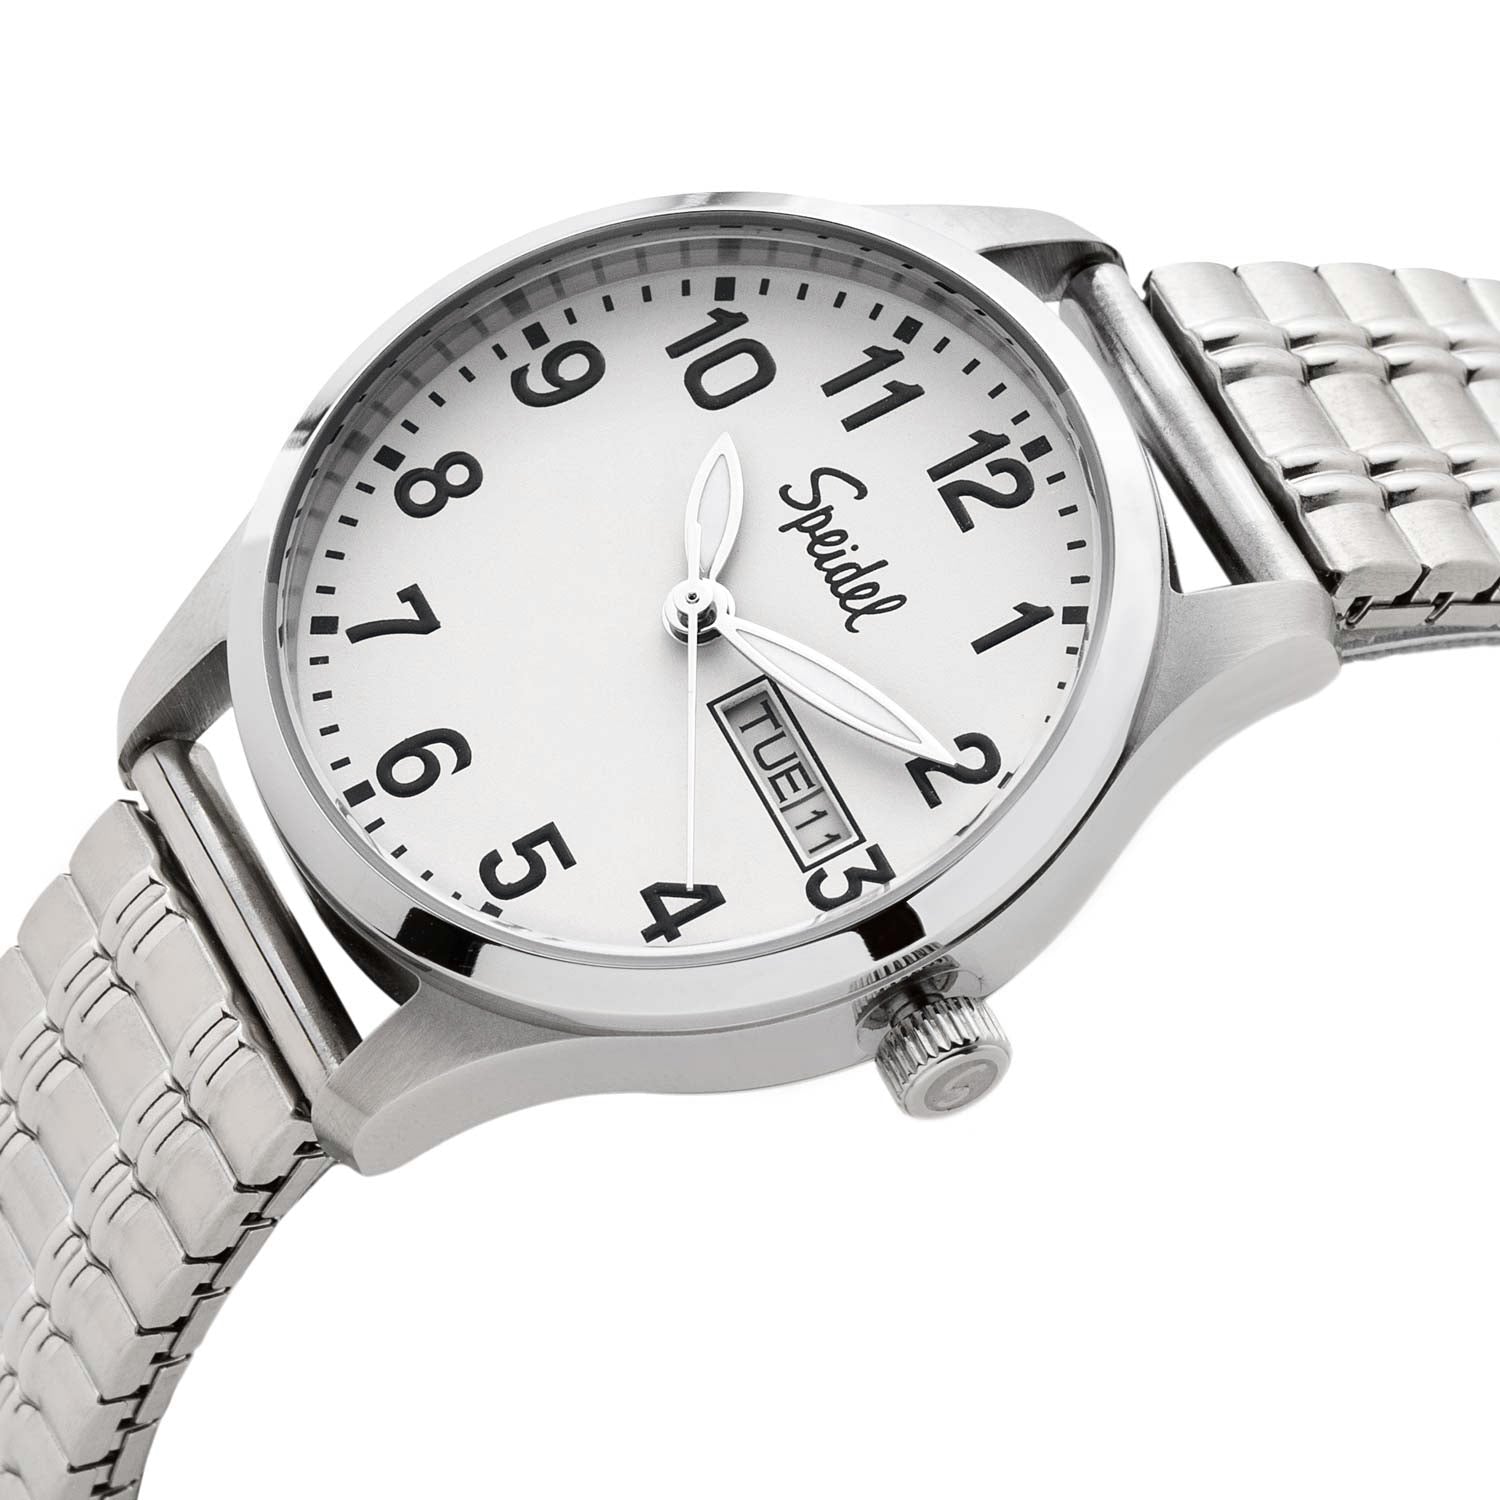 Women's Watch With Twist-O-Flex Watch, Gold And Silver Tone